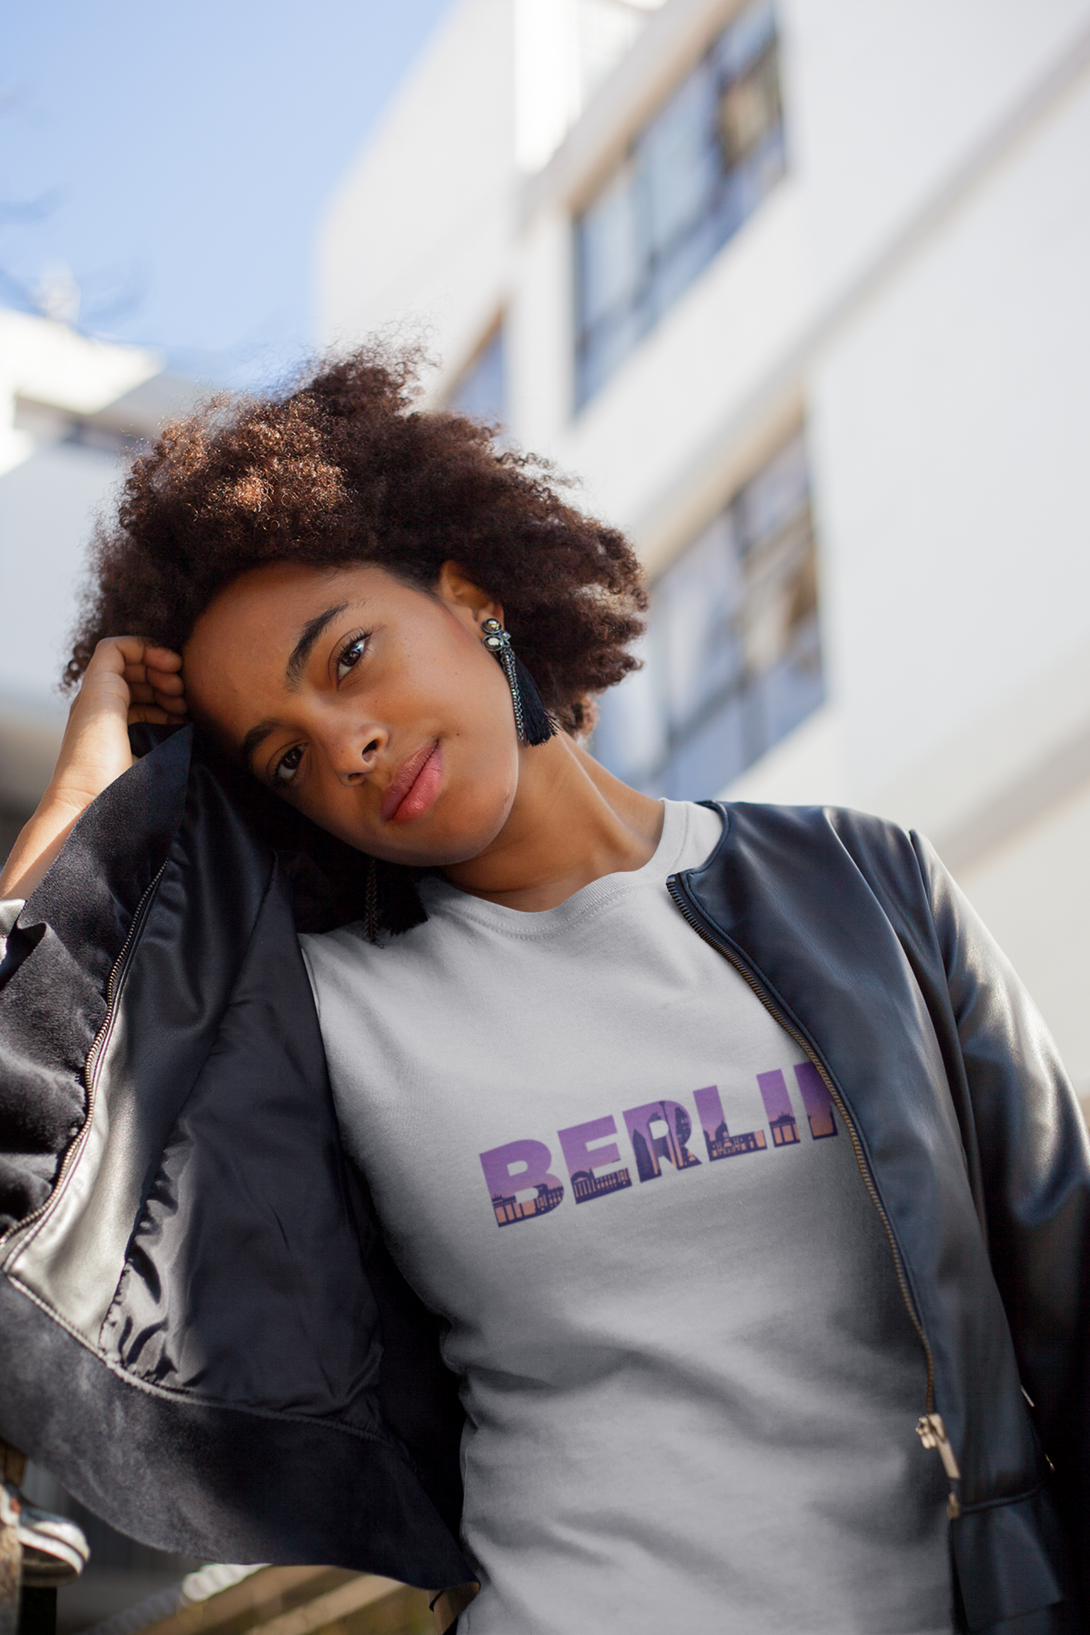 Berlin Skyline Printed T-Shirt For Women - WowWaves - 6